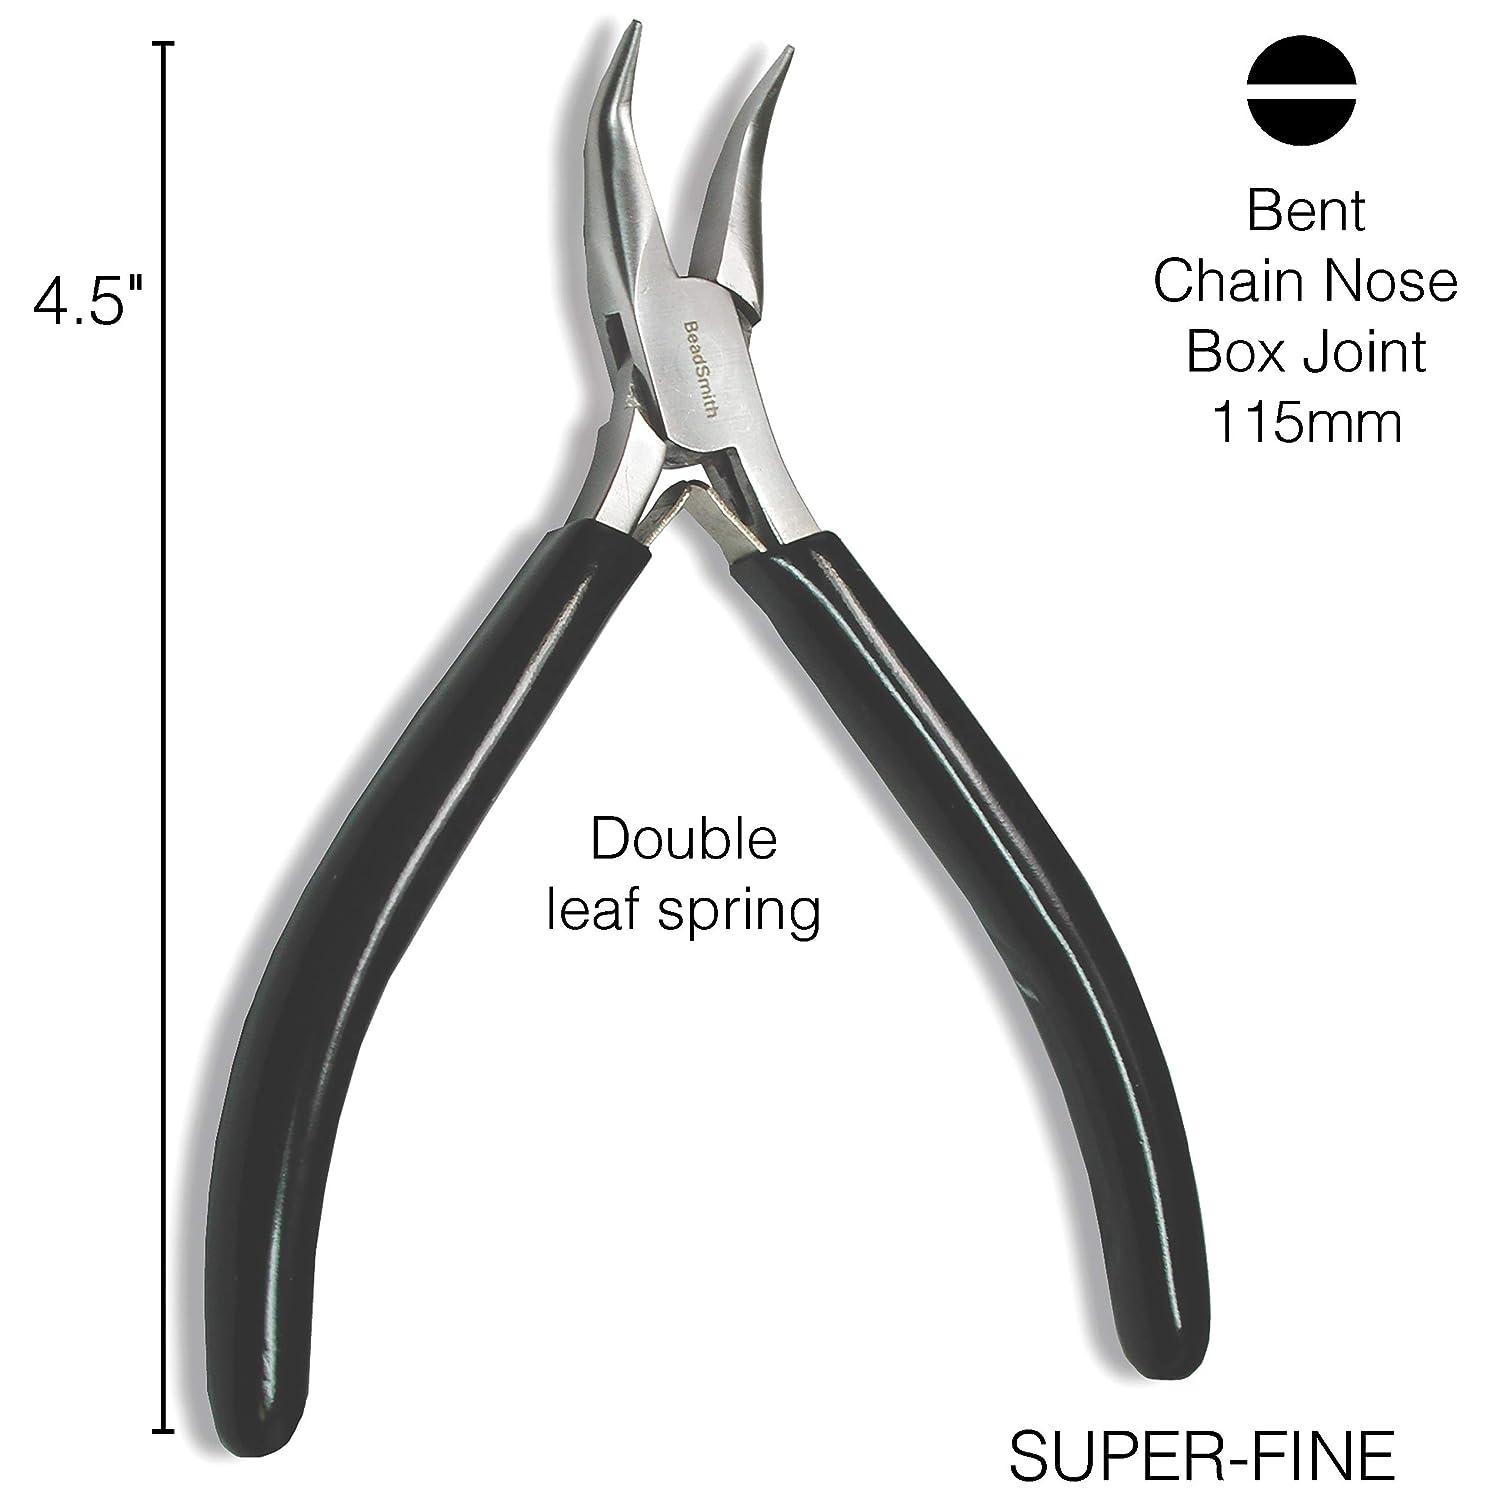 Chain Nose Bent Pliers